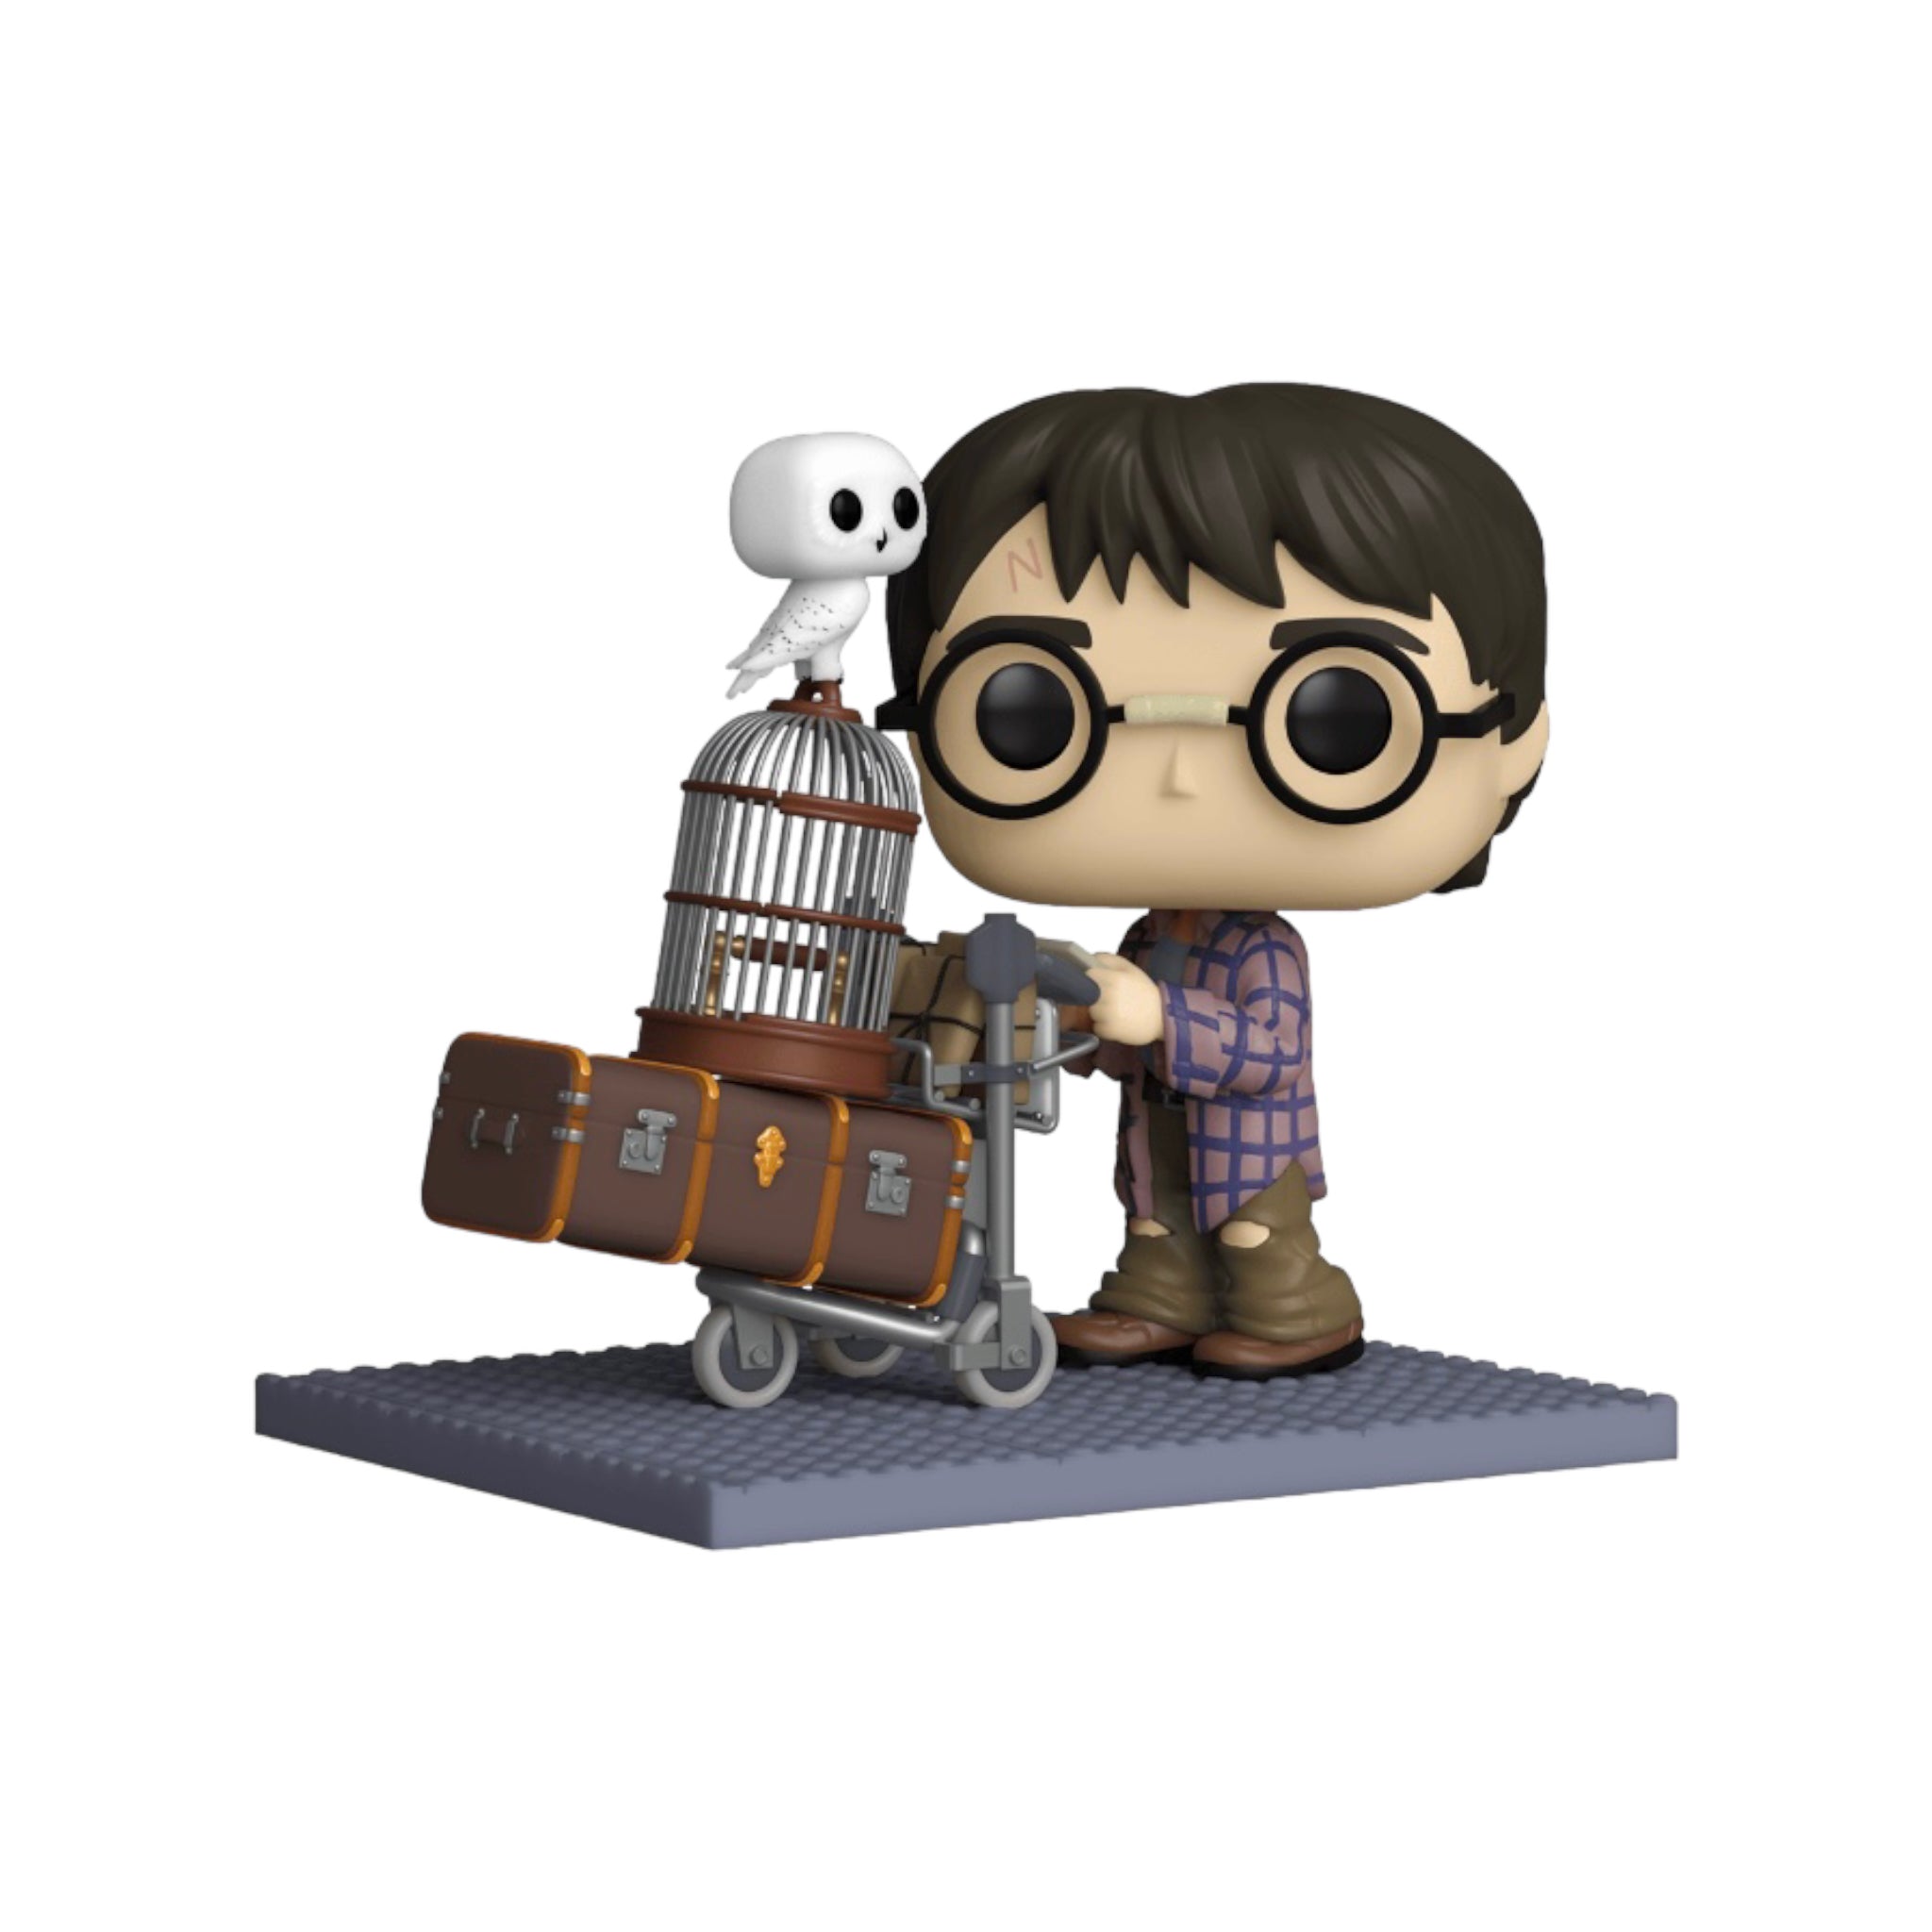 Harry Potter Pushing Trolley #135 Deluxe Funko Pop! - Harry Potter